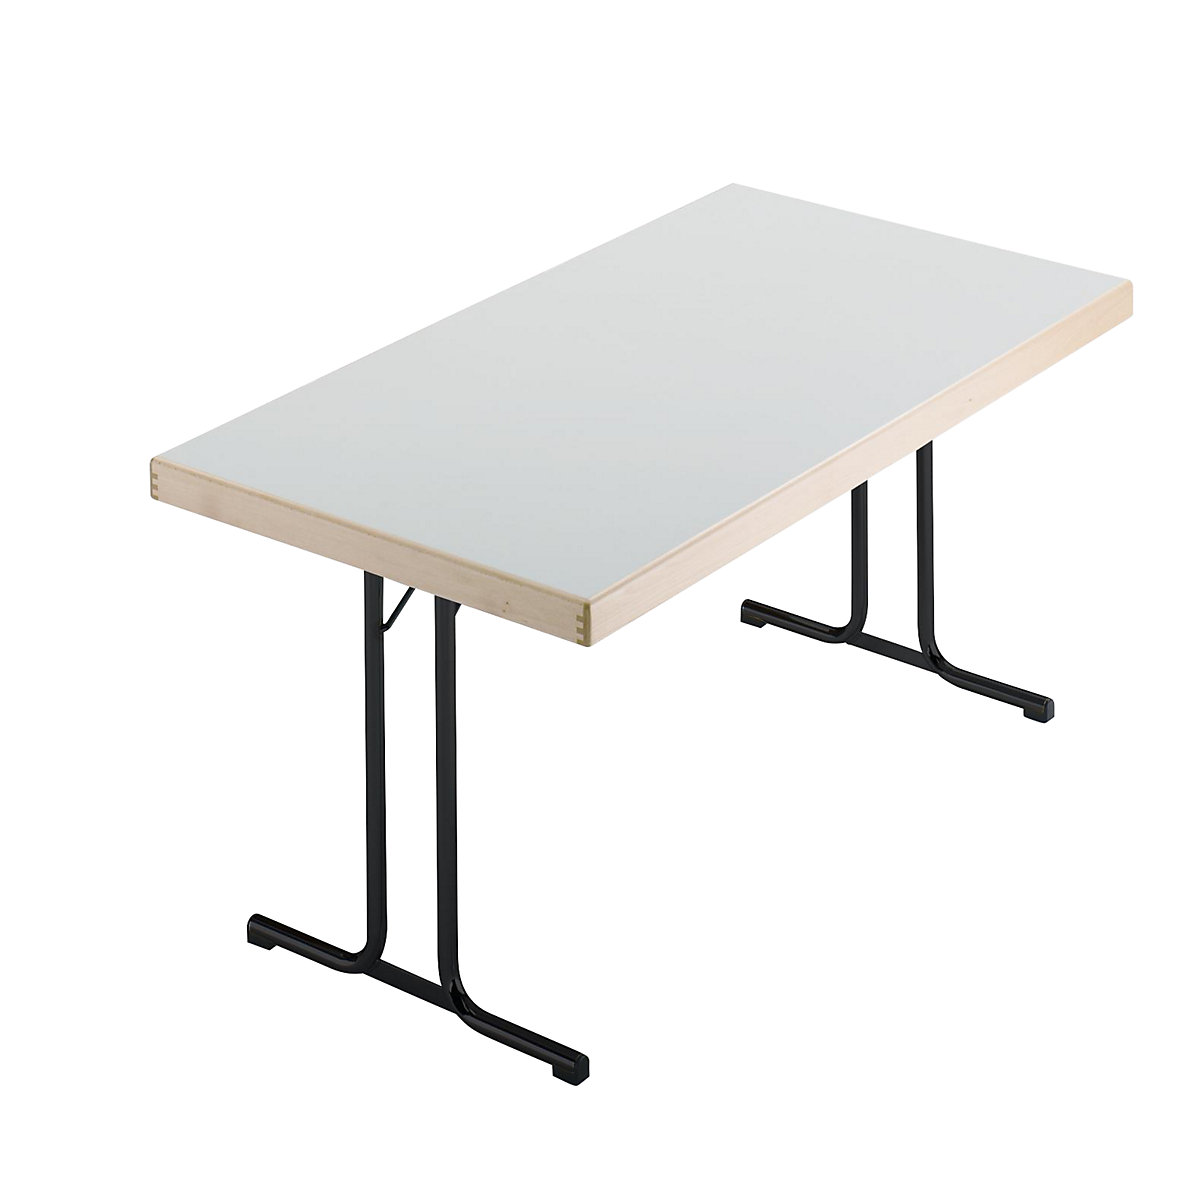 Sklápací stôl, podstavec s dvojitými nohami tvaru T, 1200 x 800 mm, podstavec antracitová, doska svetlošedá-6